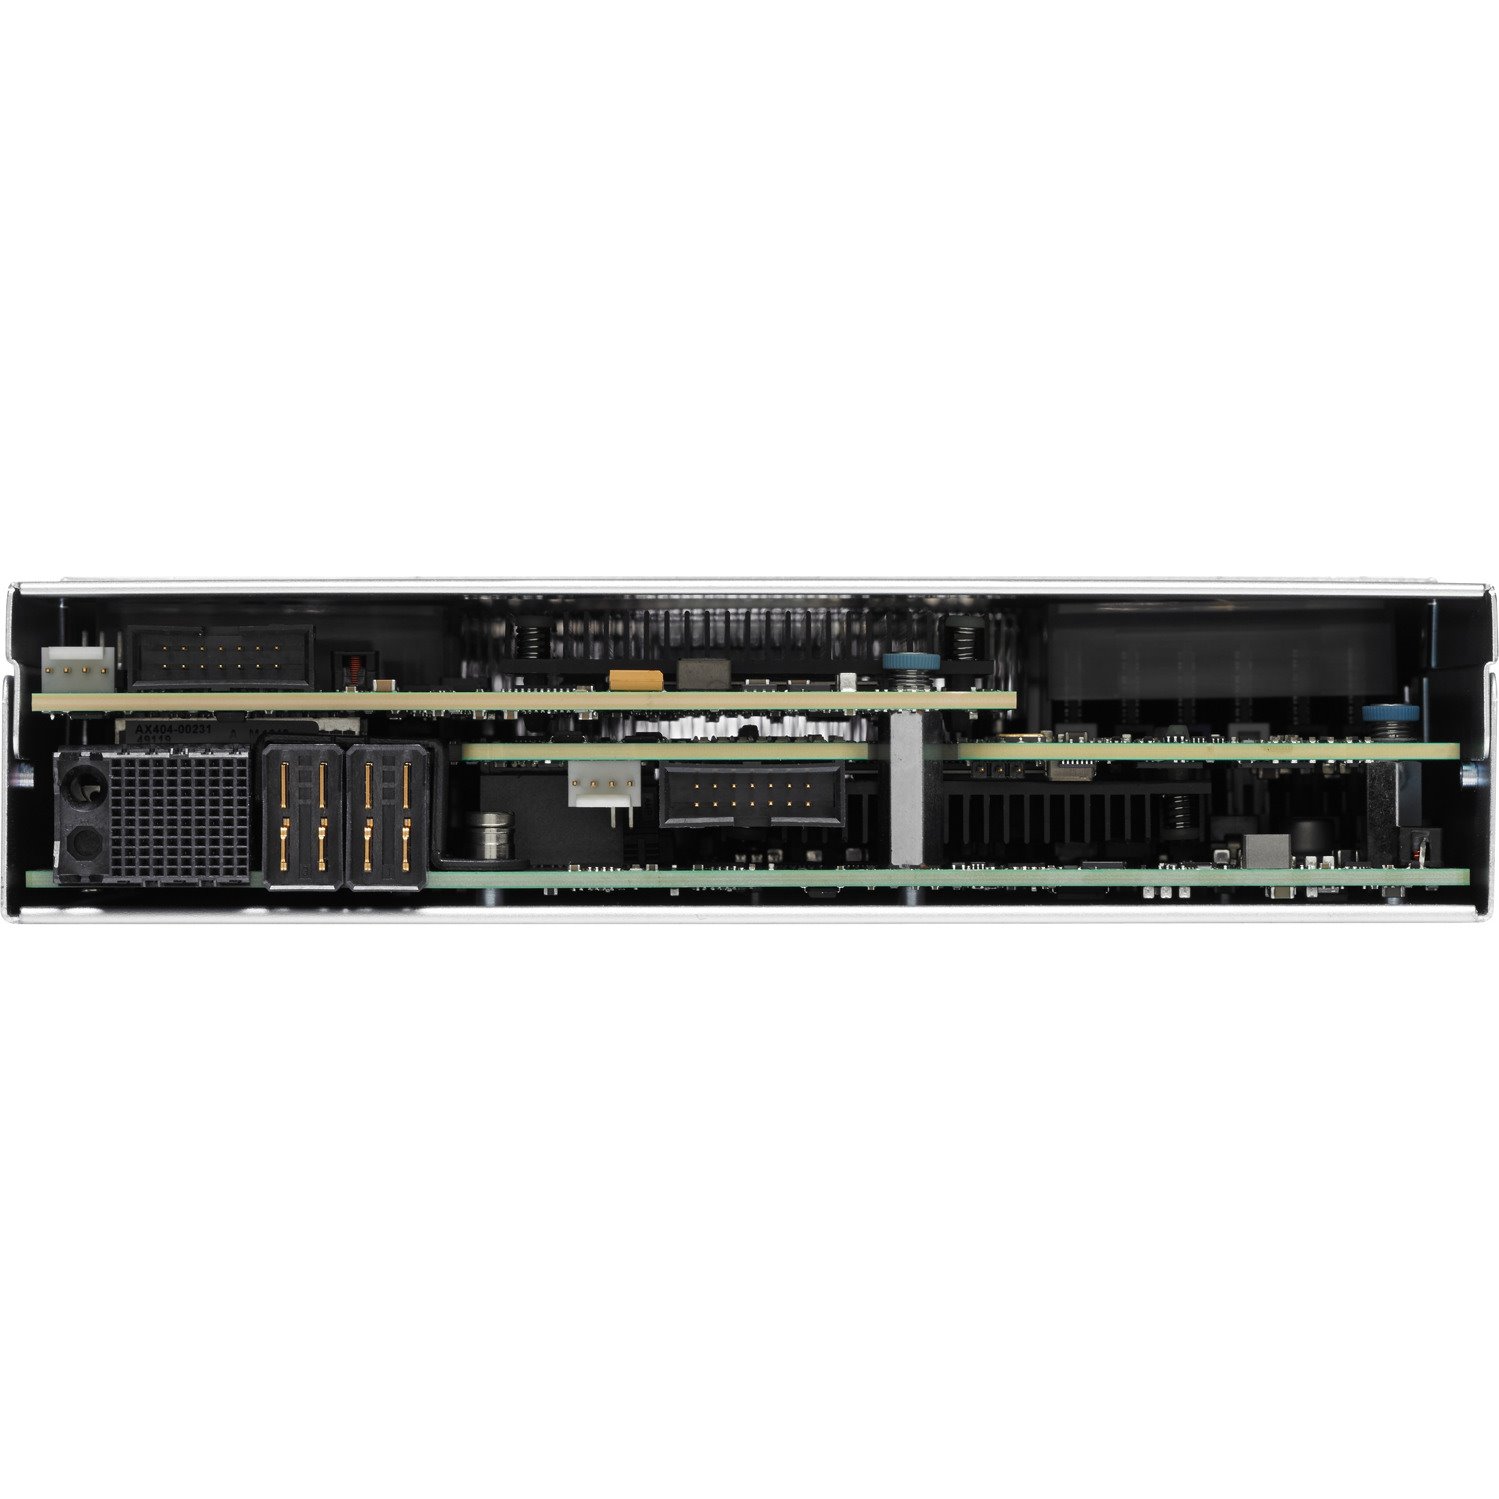 Cisco B200 M4 Blade Server - 2 x Intel Xeon E5-2637 v4 3.50 GHz - 256 GB RAM - Serial ATA/600, 12Gb/s SAS Controller